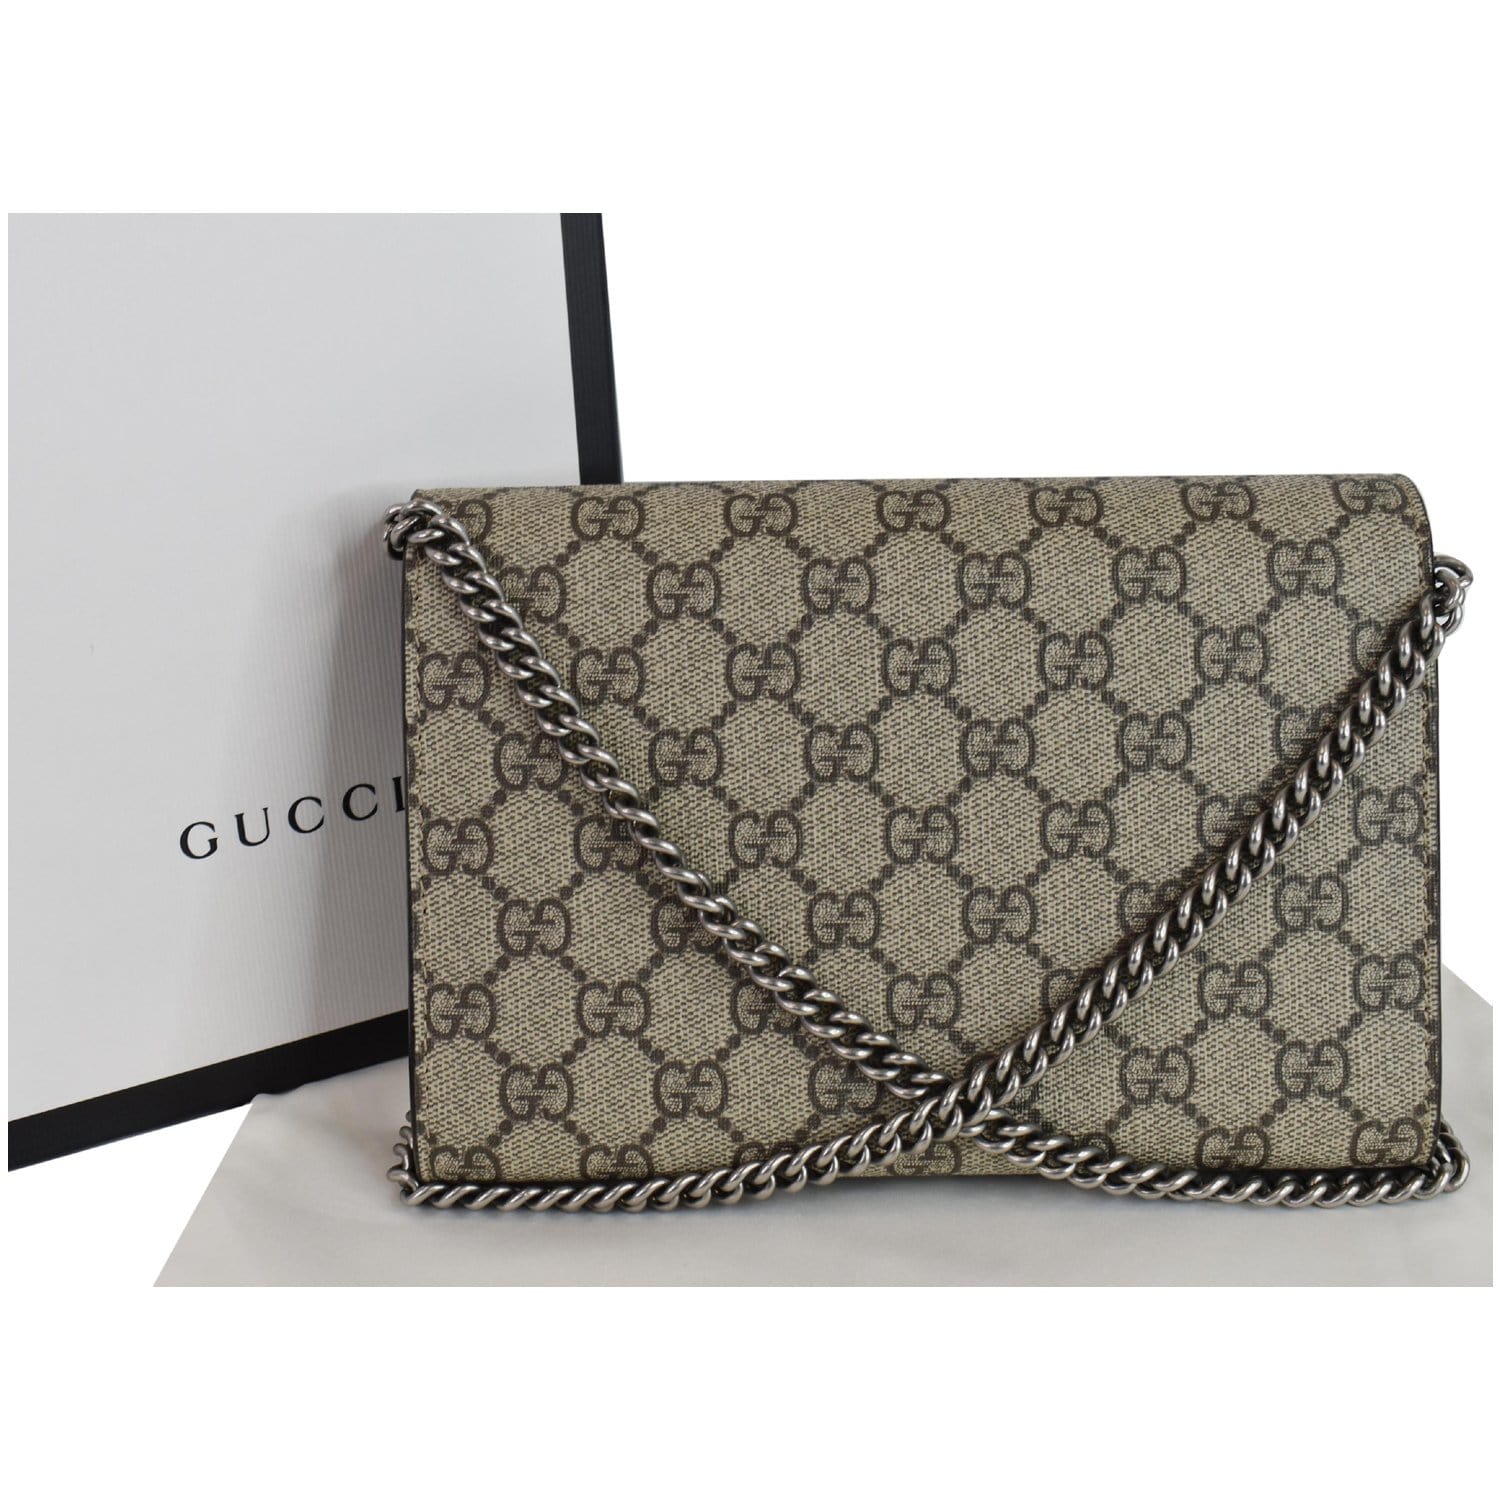 Gucci Dionysus GG Supreme Crossbody Chain Wallet Beige